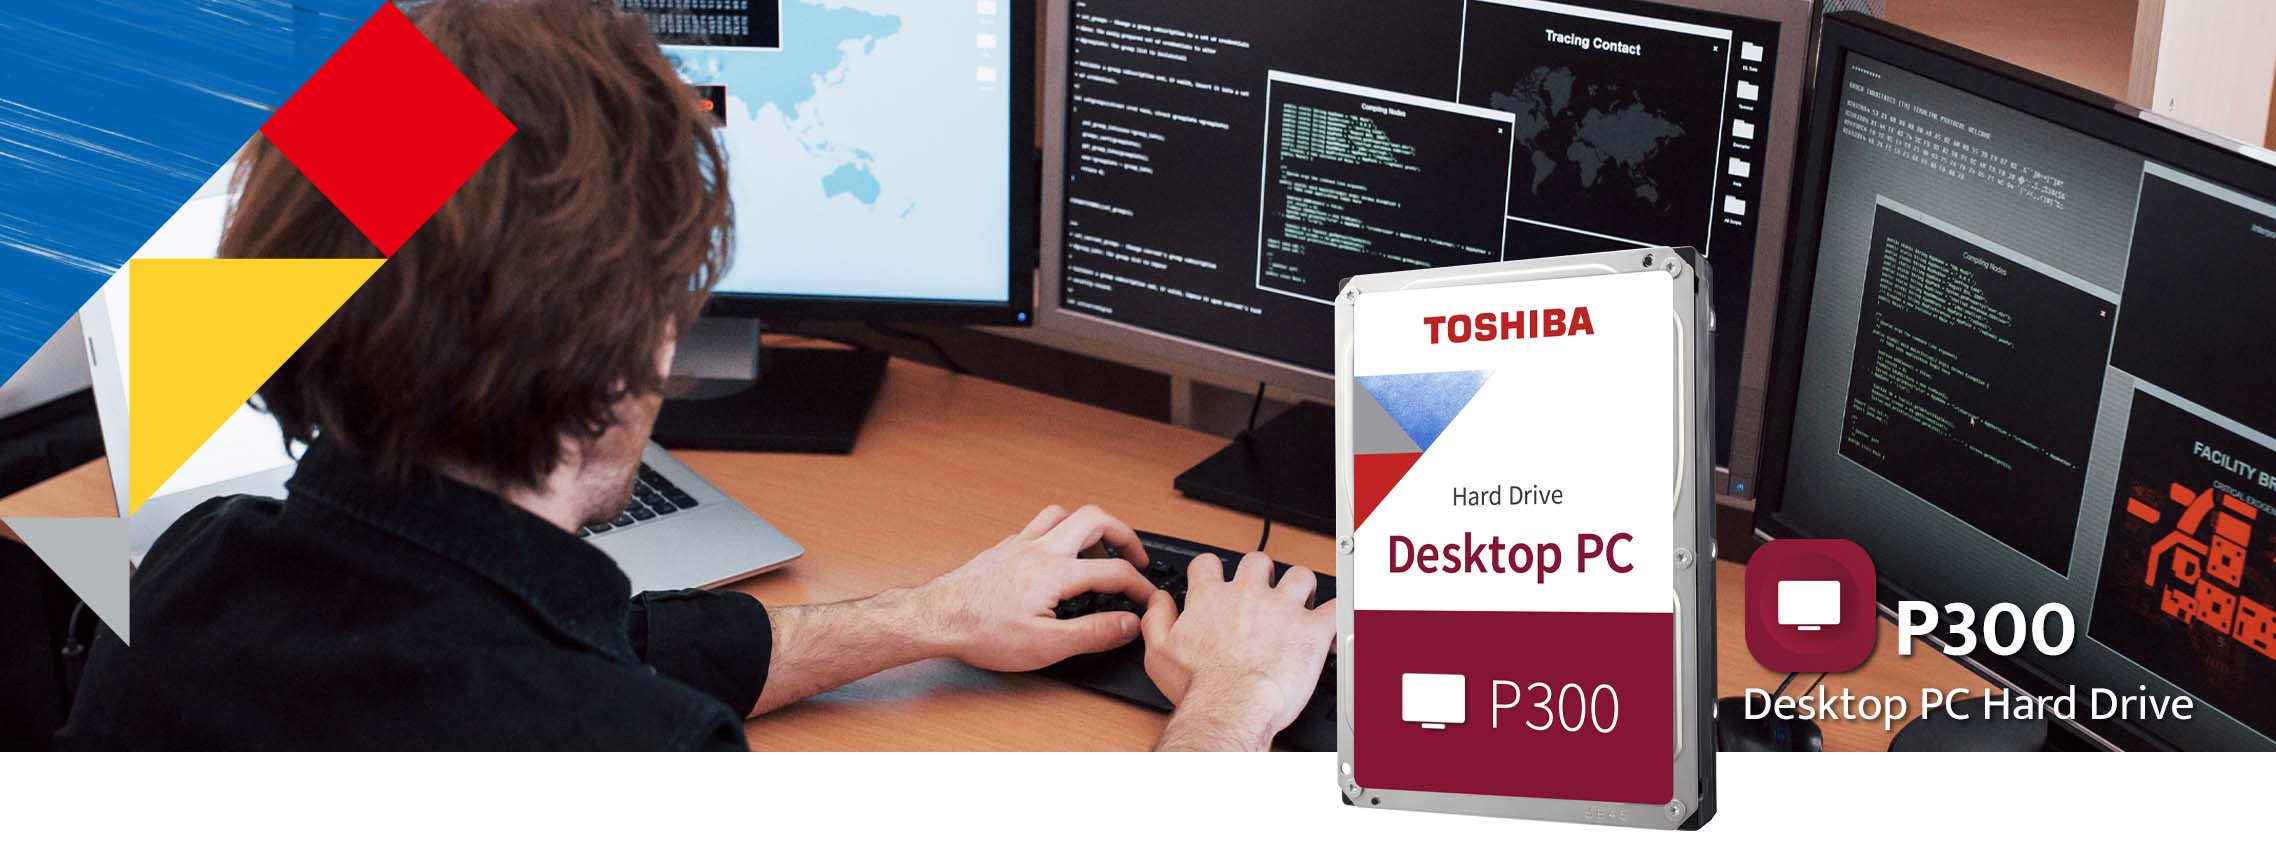 P300 Desktop PC Hard Drive | Toshiba Storage Asia